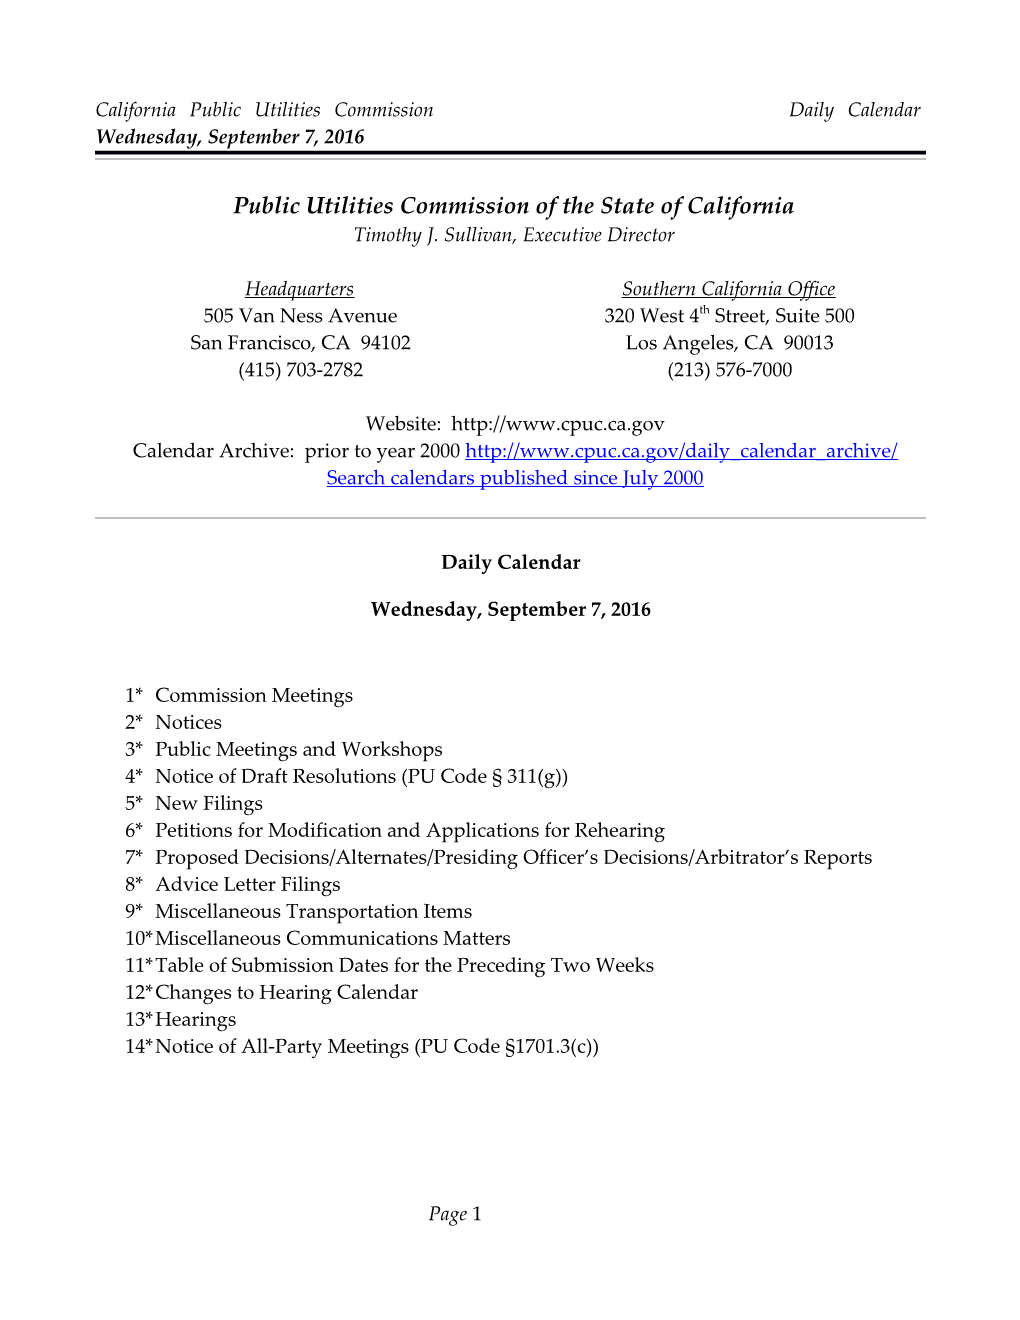 California Public Utilities Commission Daily Calendar Wednesday, September 7, 2016